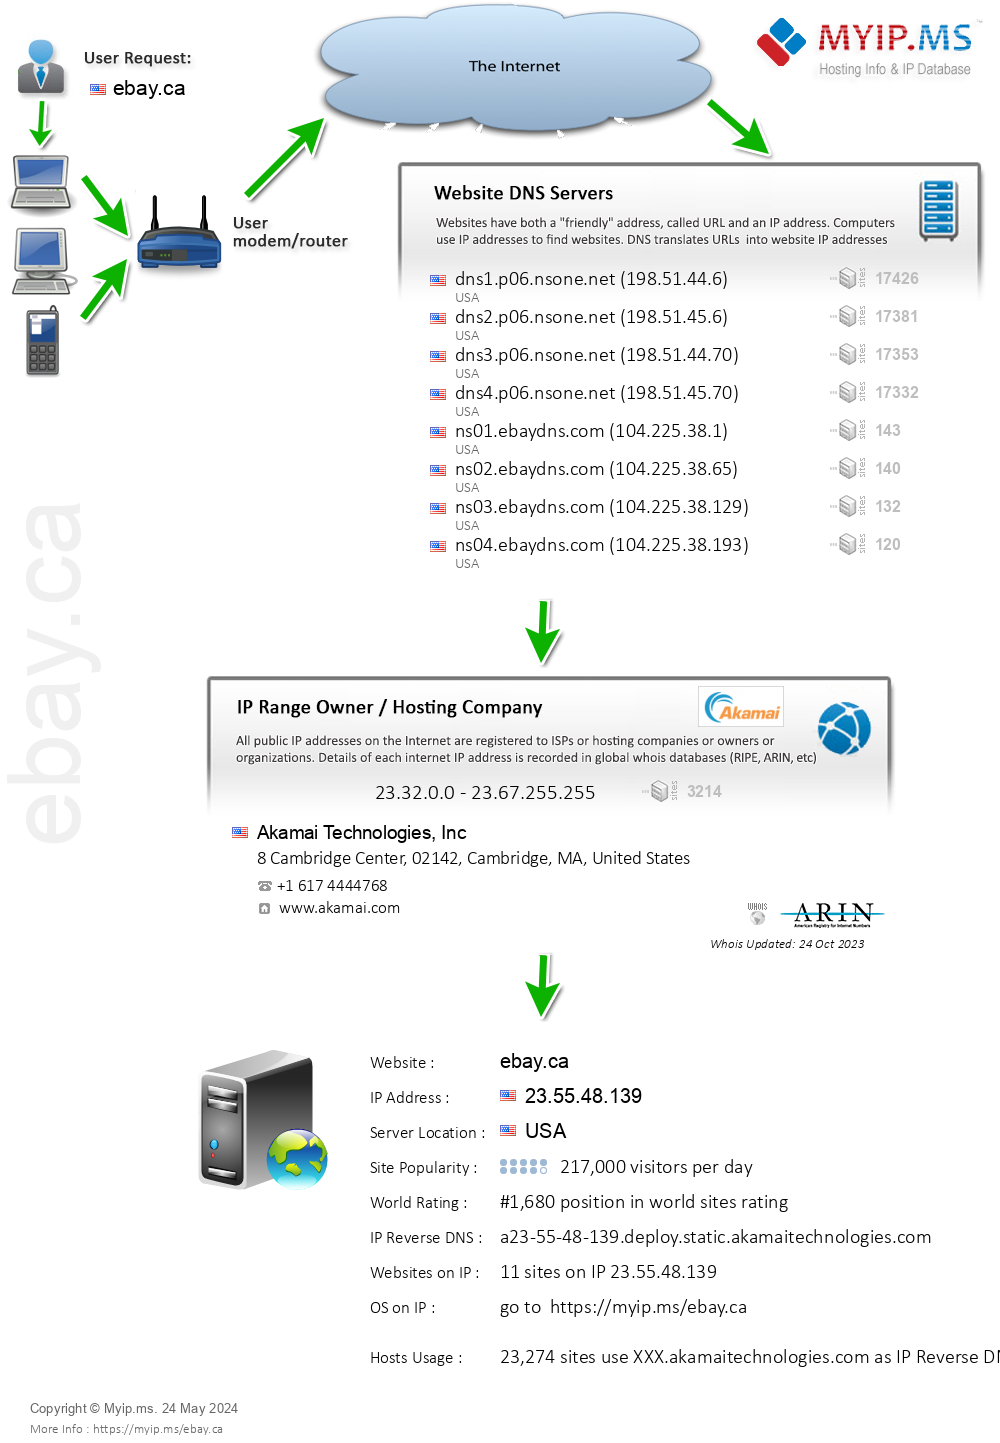 Ebay.ca - Website Hosting Visual IP Diagram